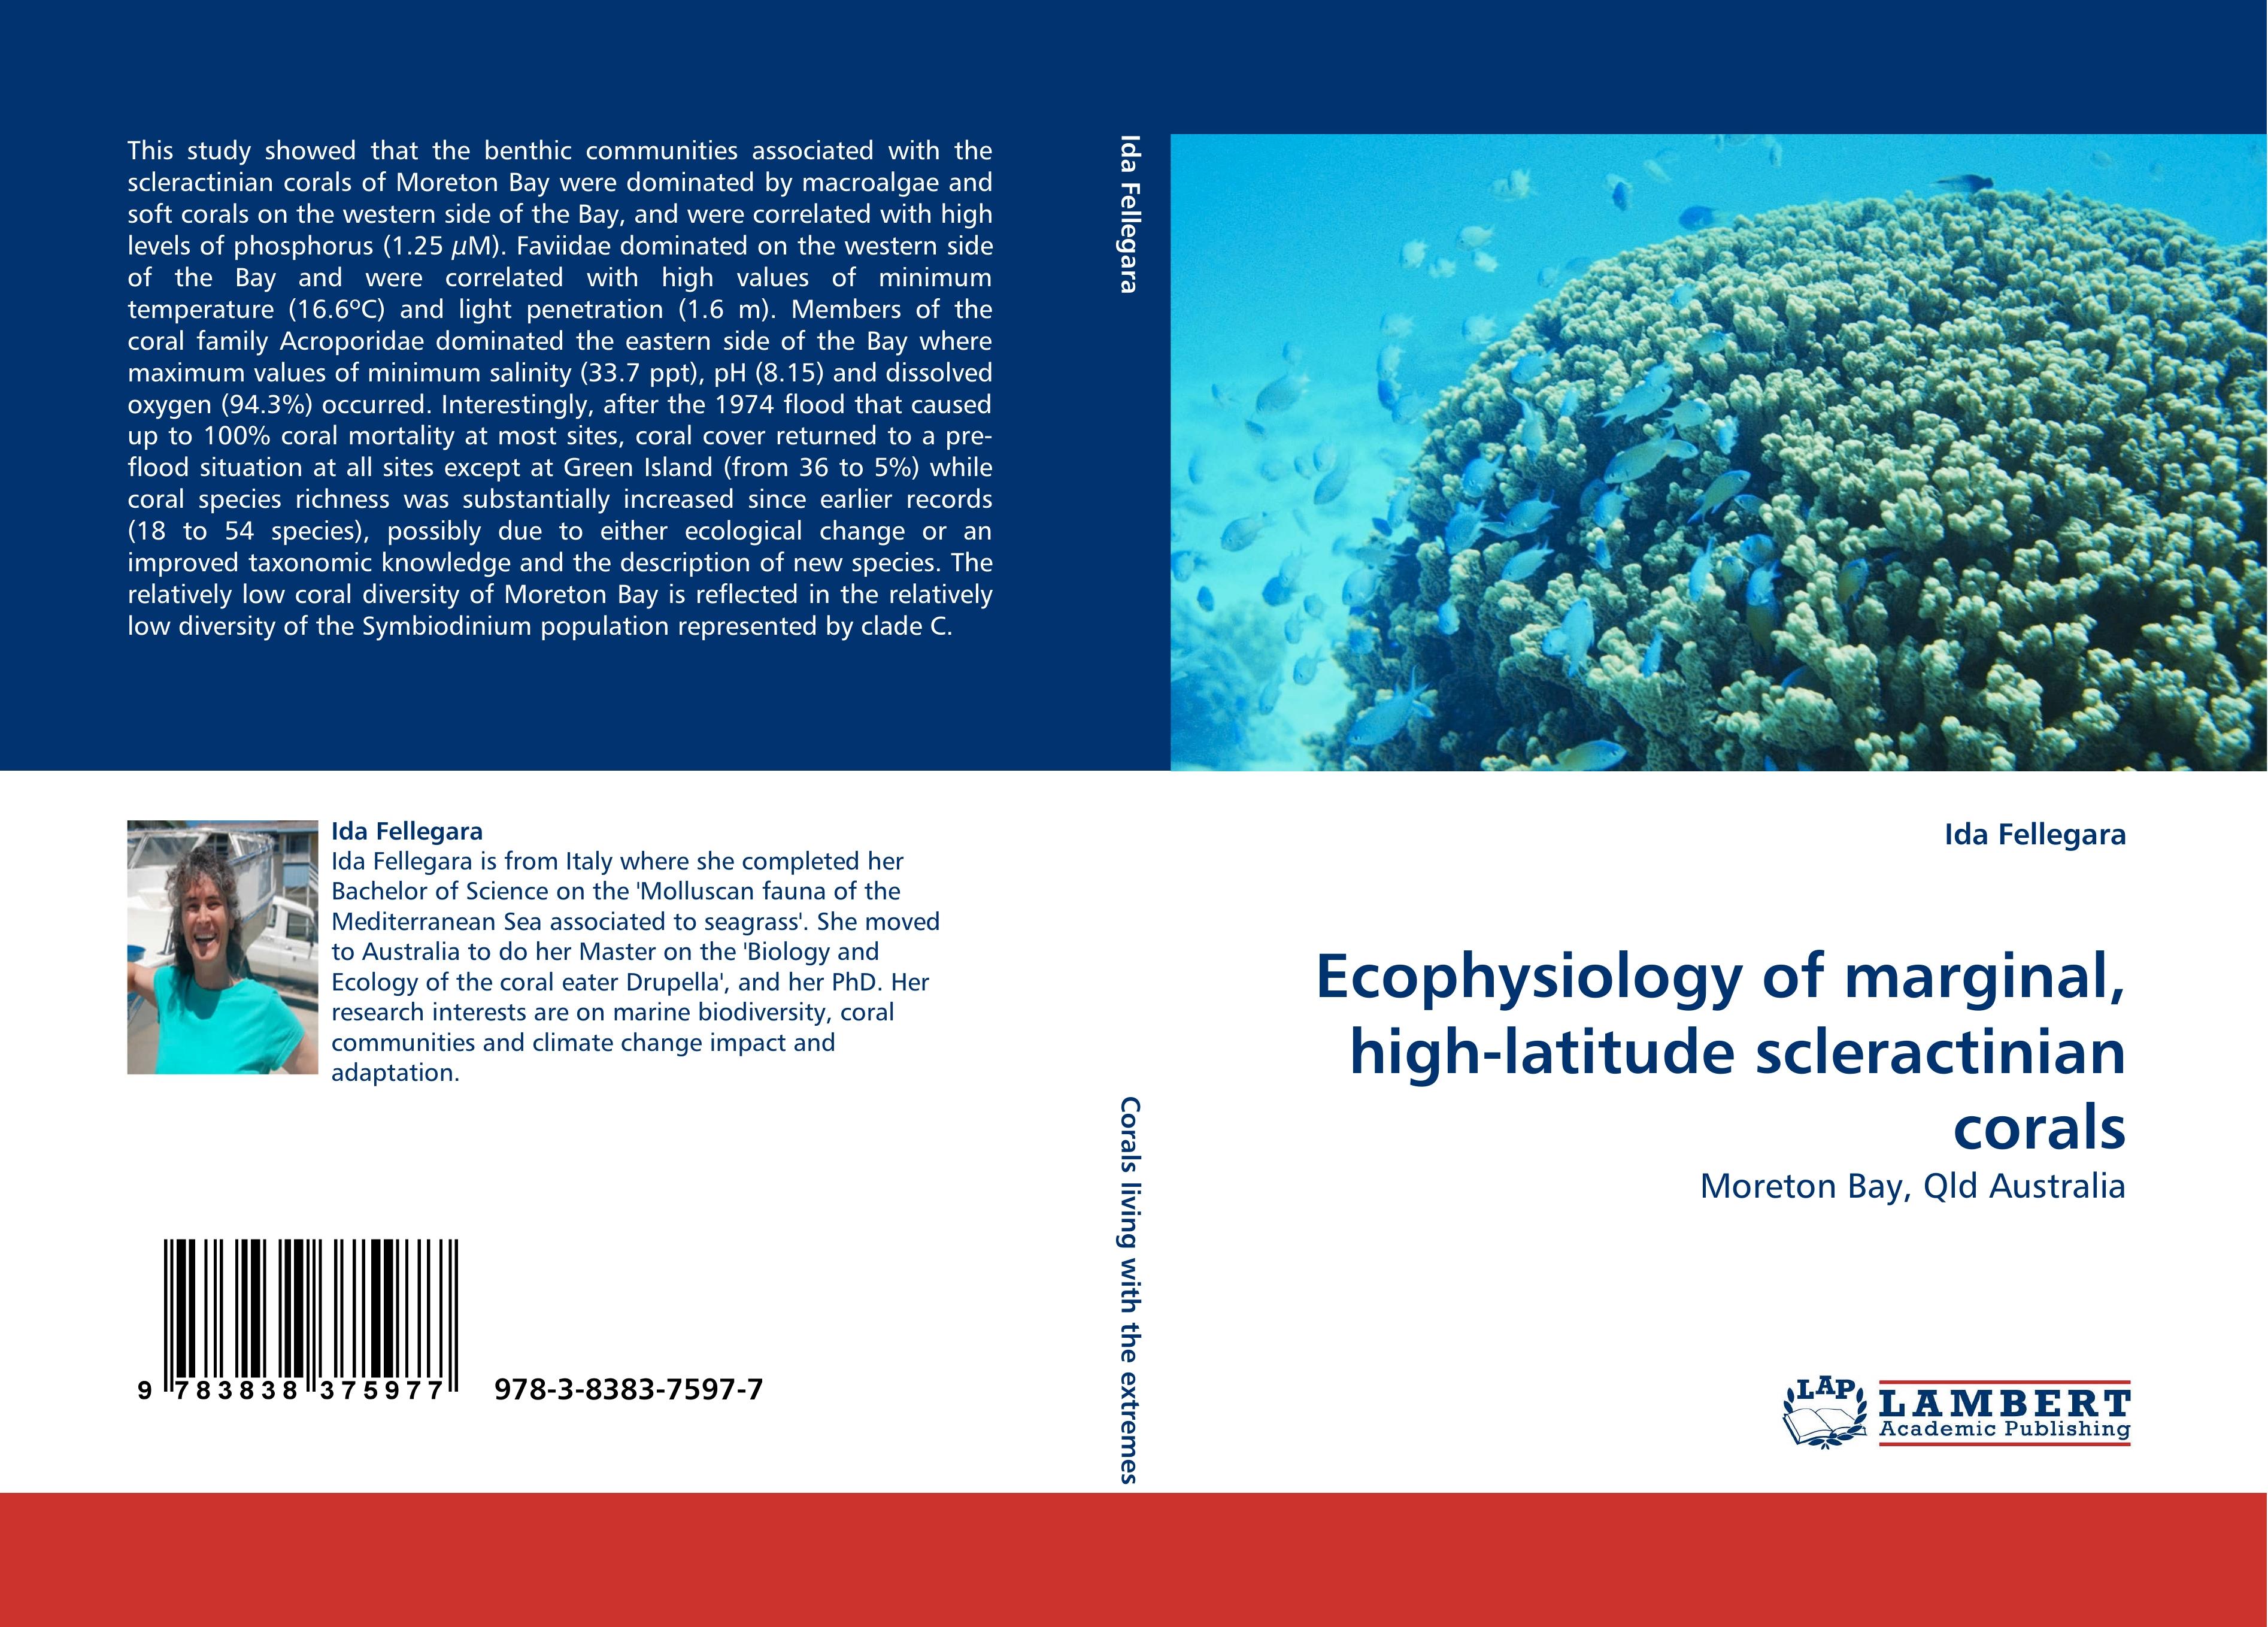 Ecophysiology of marginal, high-latitude scleractinian corals - Ida Fellegara